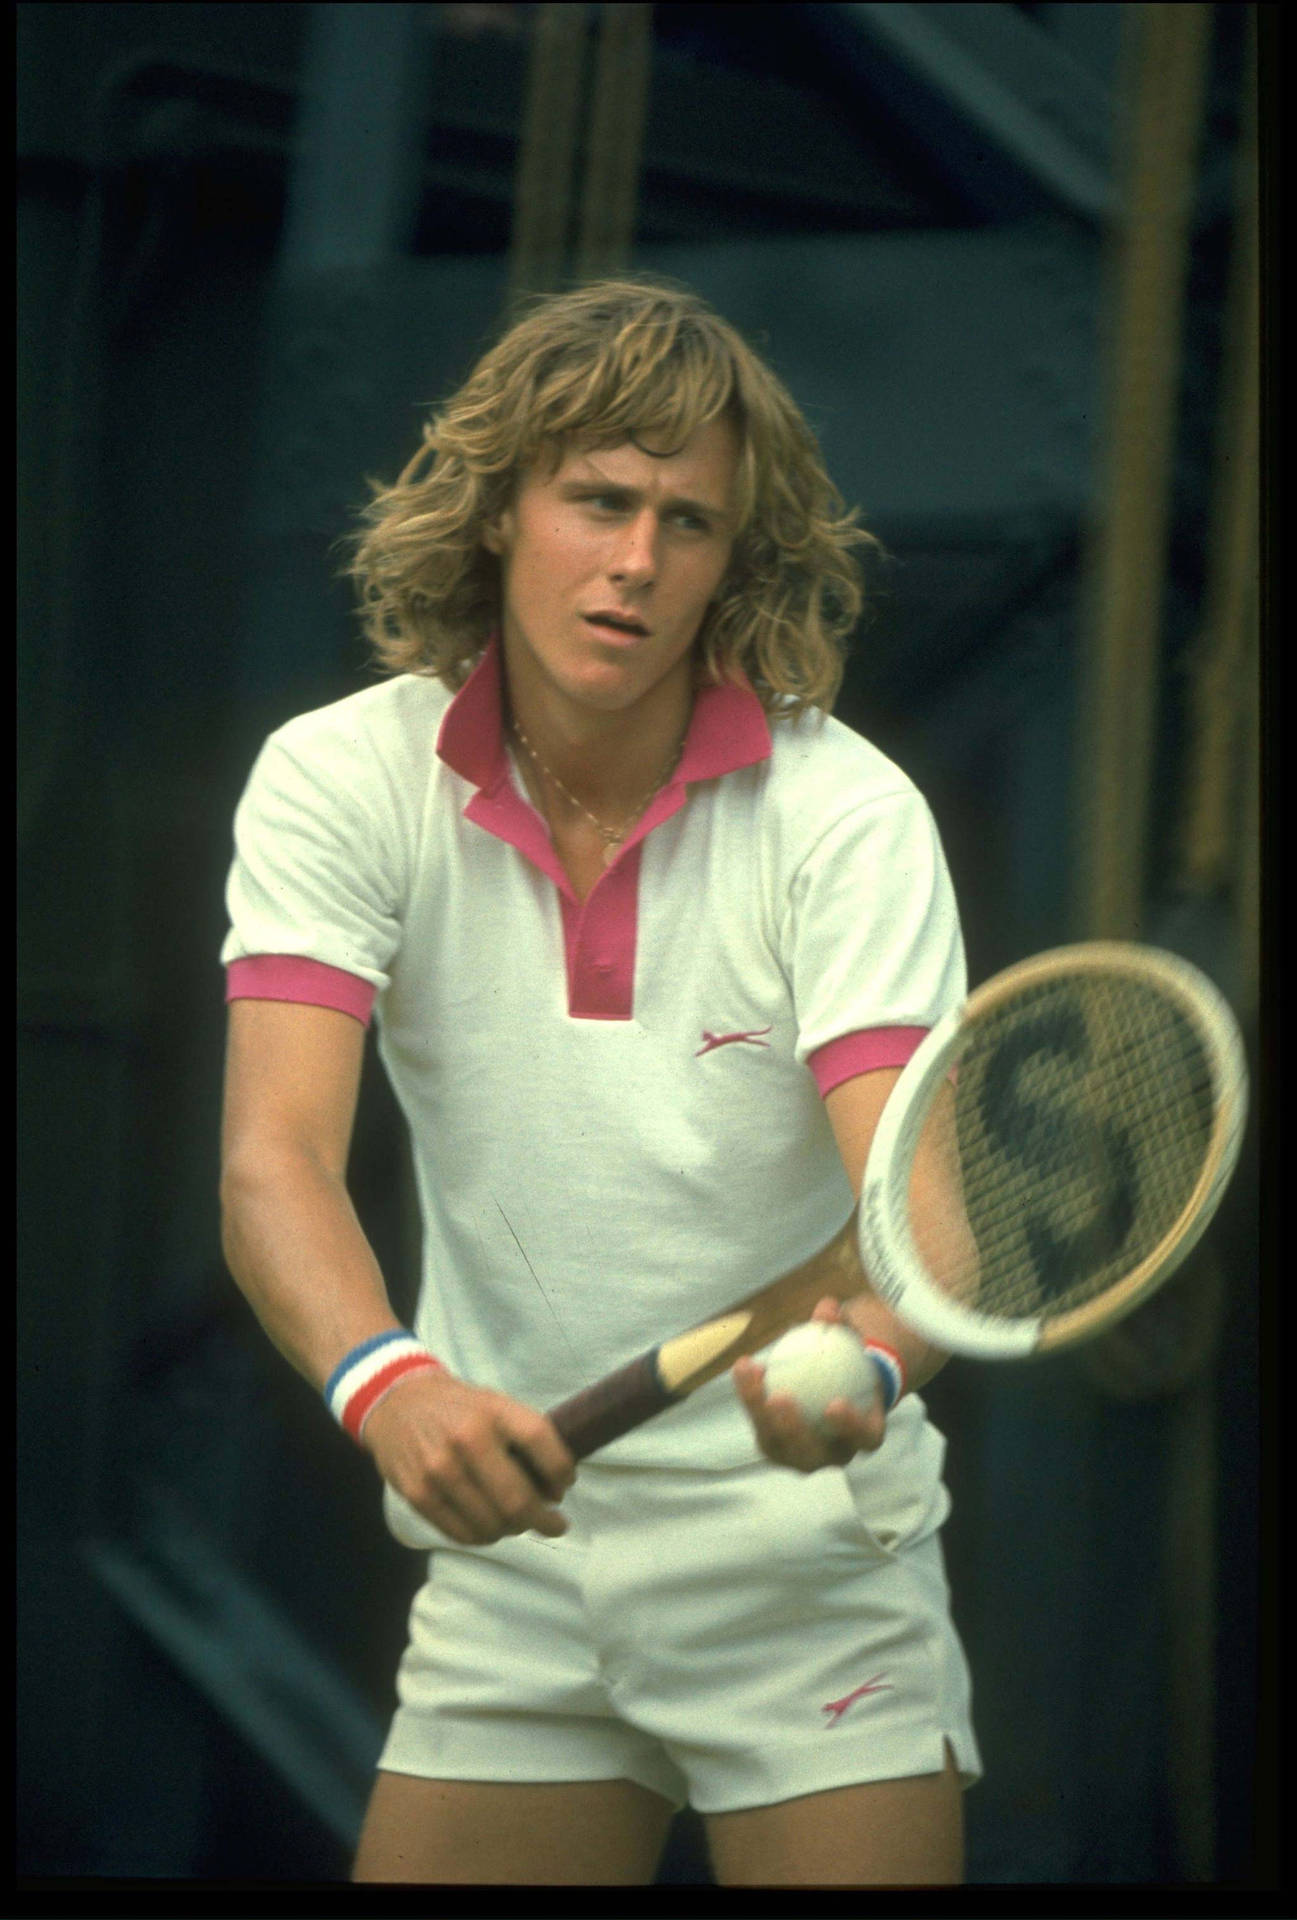 1974 Wimbledon Tennis Championships Björn Borg Wallpaper